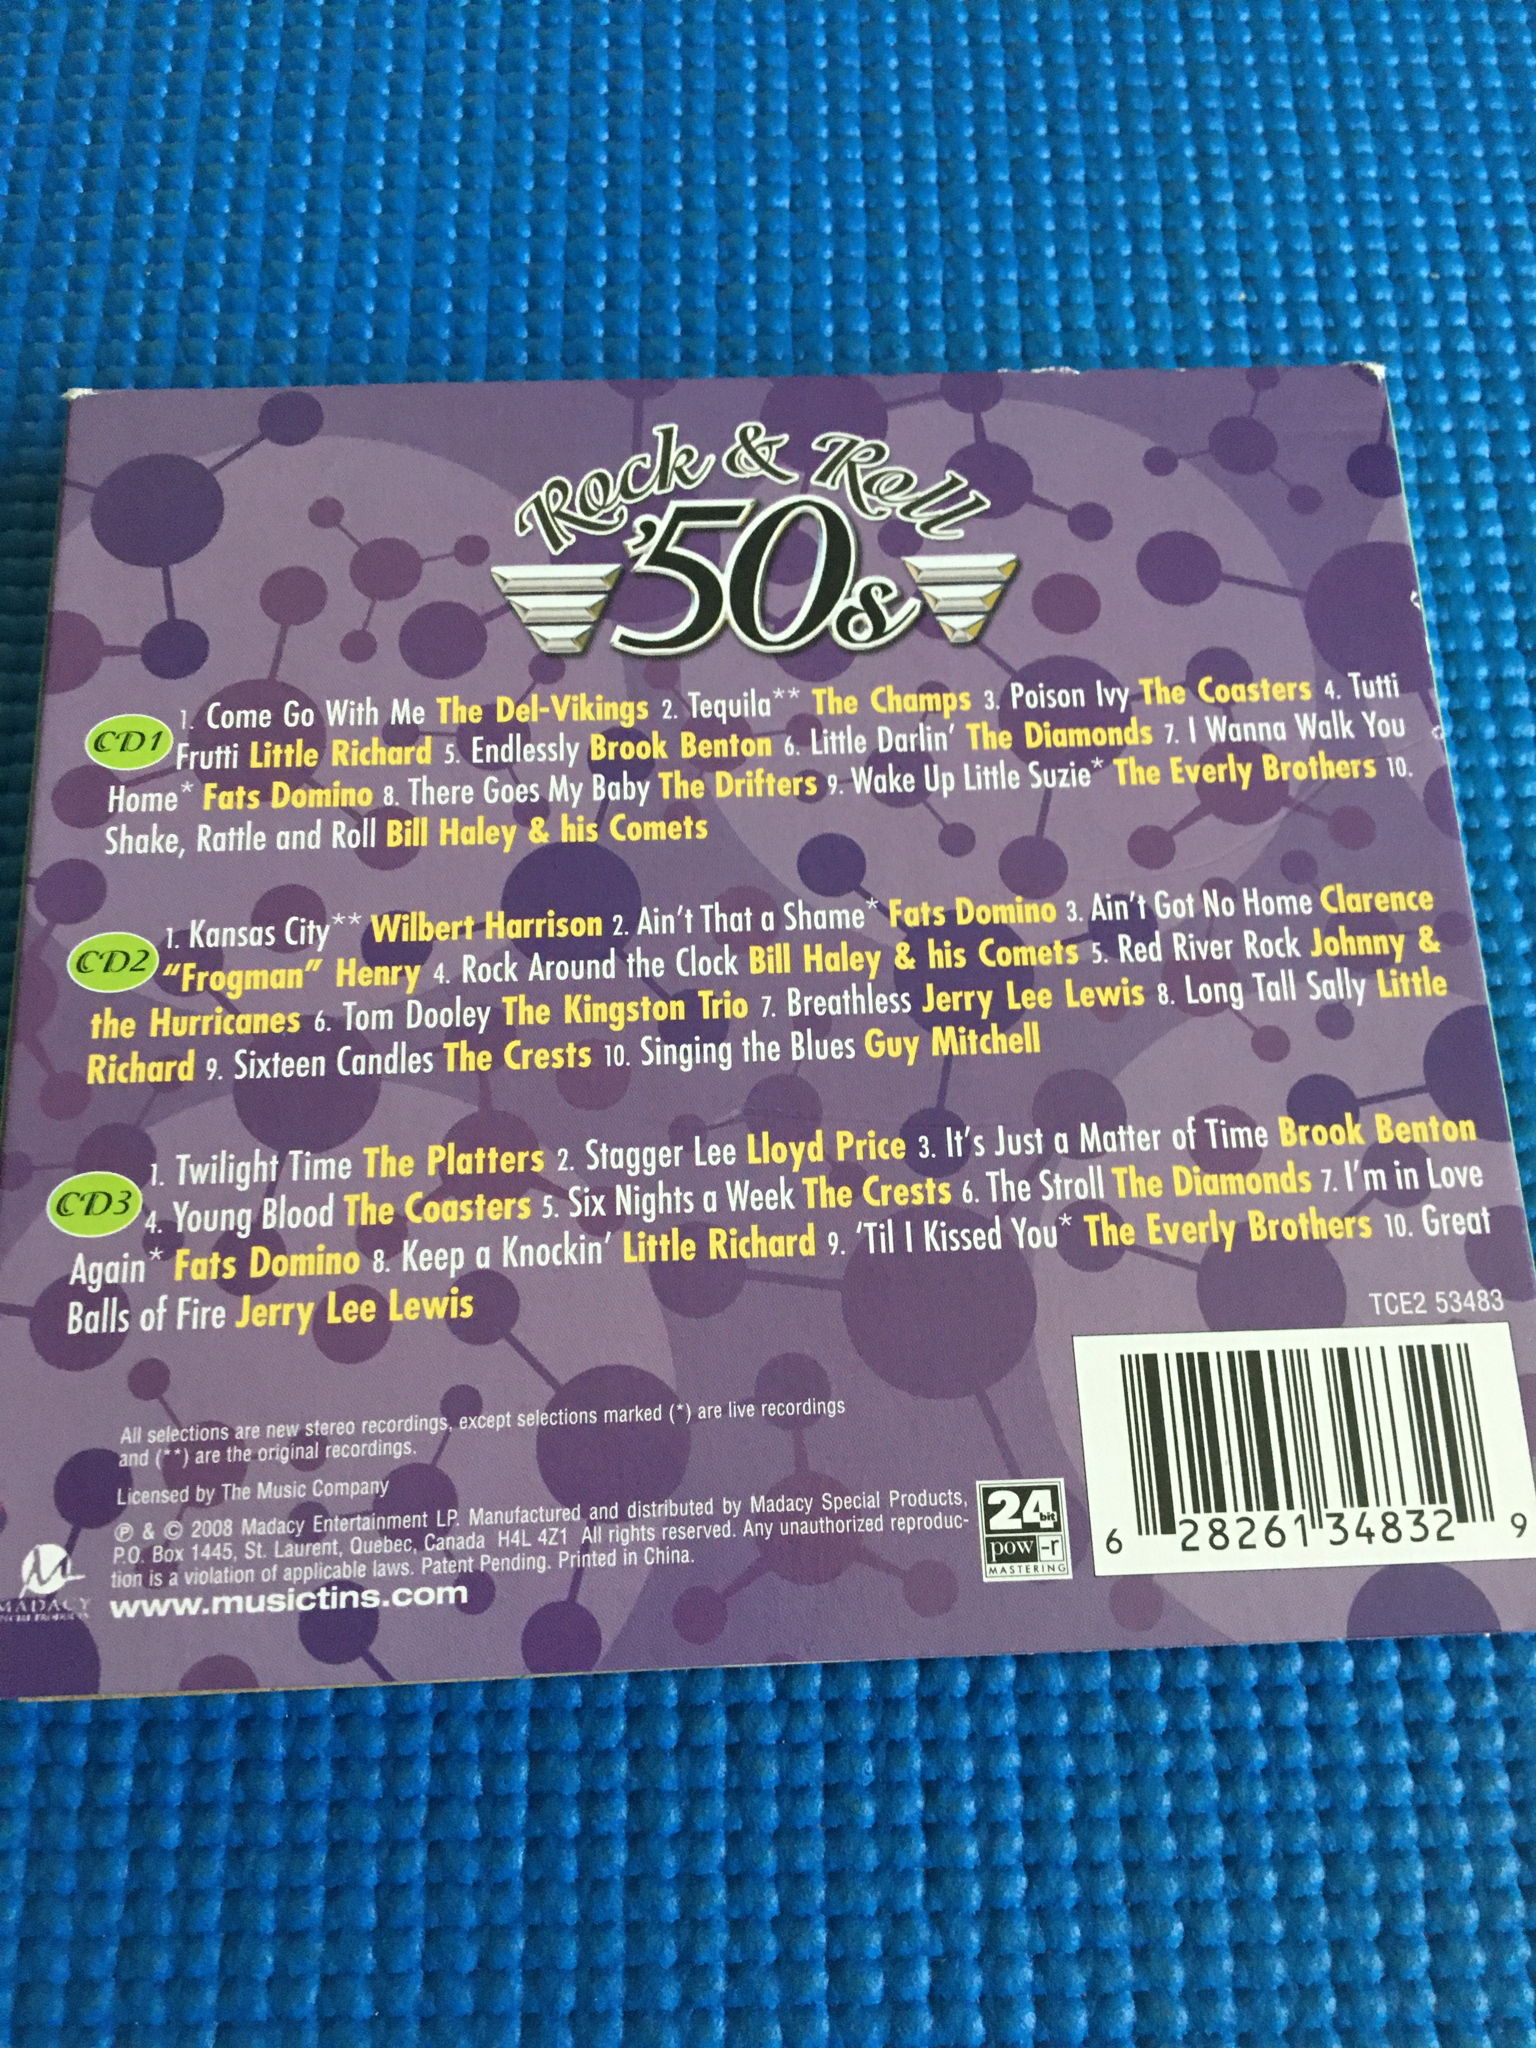 Madacy rock & roll 50s  Triple cd set 2008 2